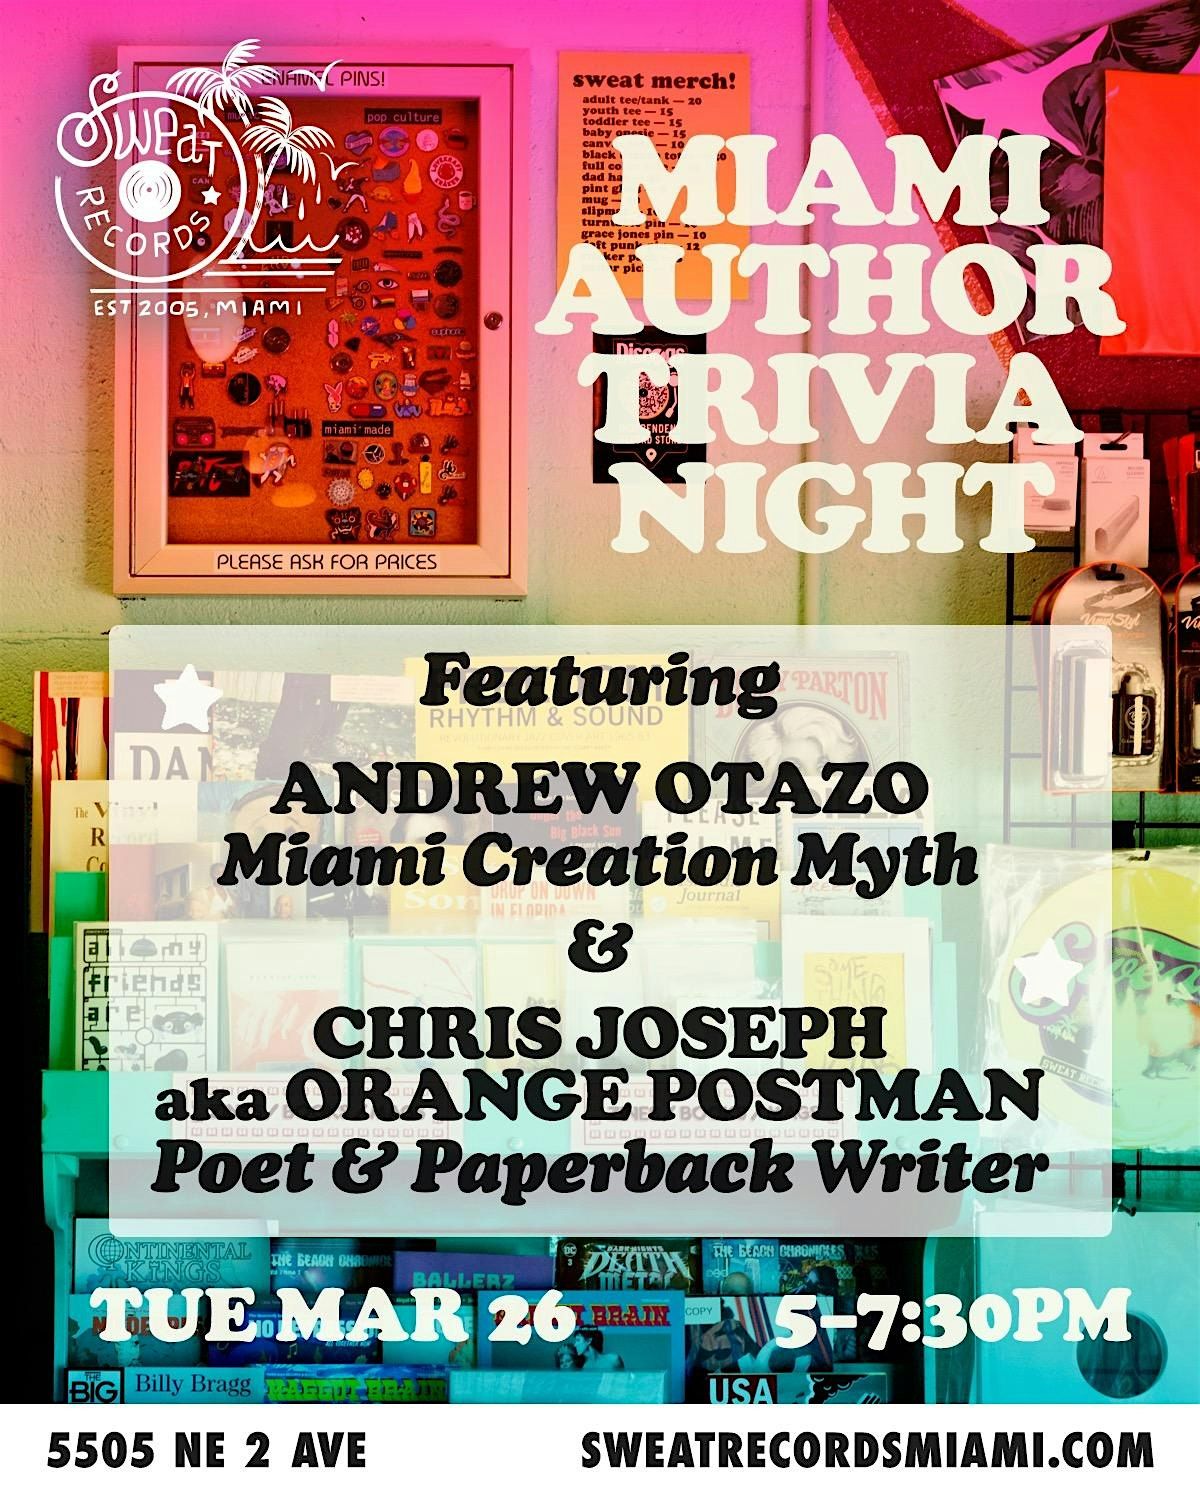 Miami Author Trivia Night @ Sweat